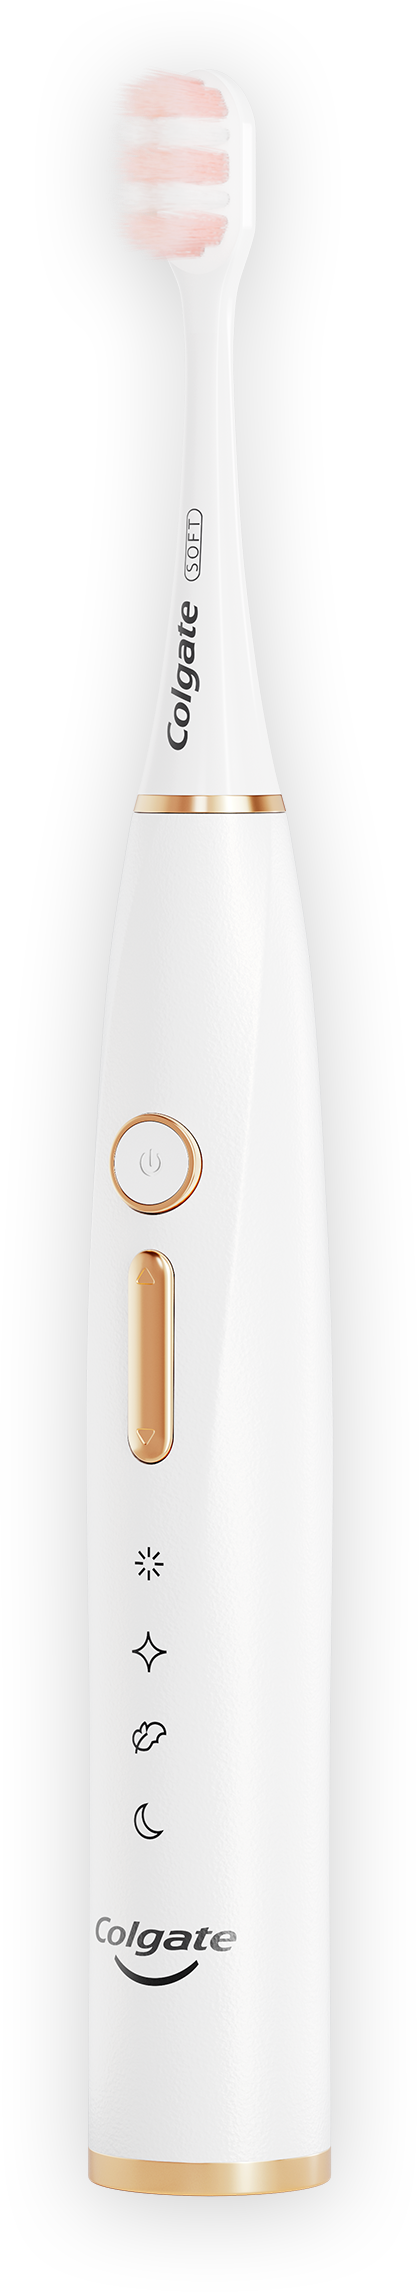 Colgate Electric Toothbrush smart pressure sensor